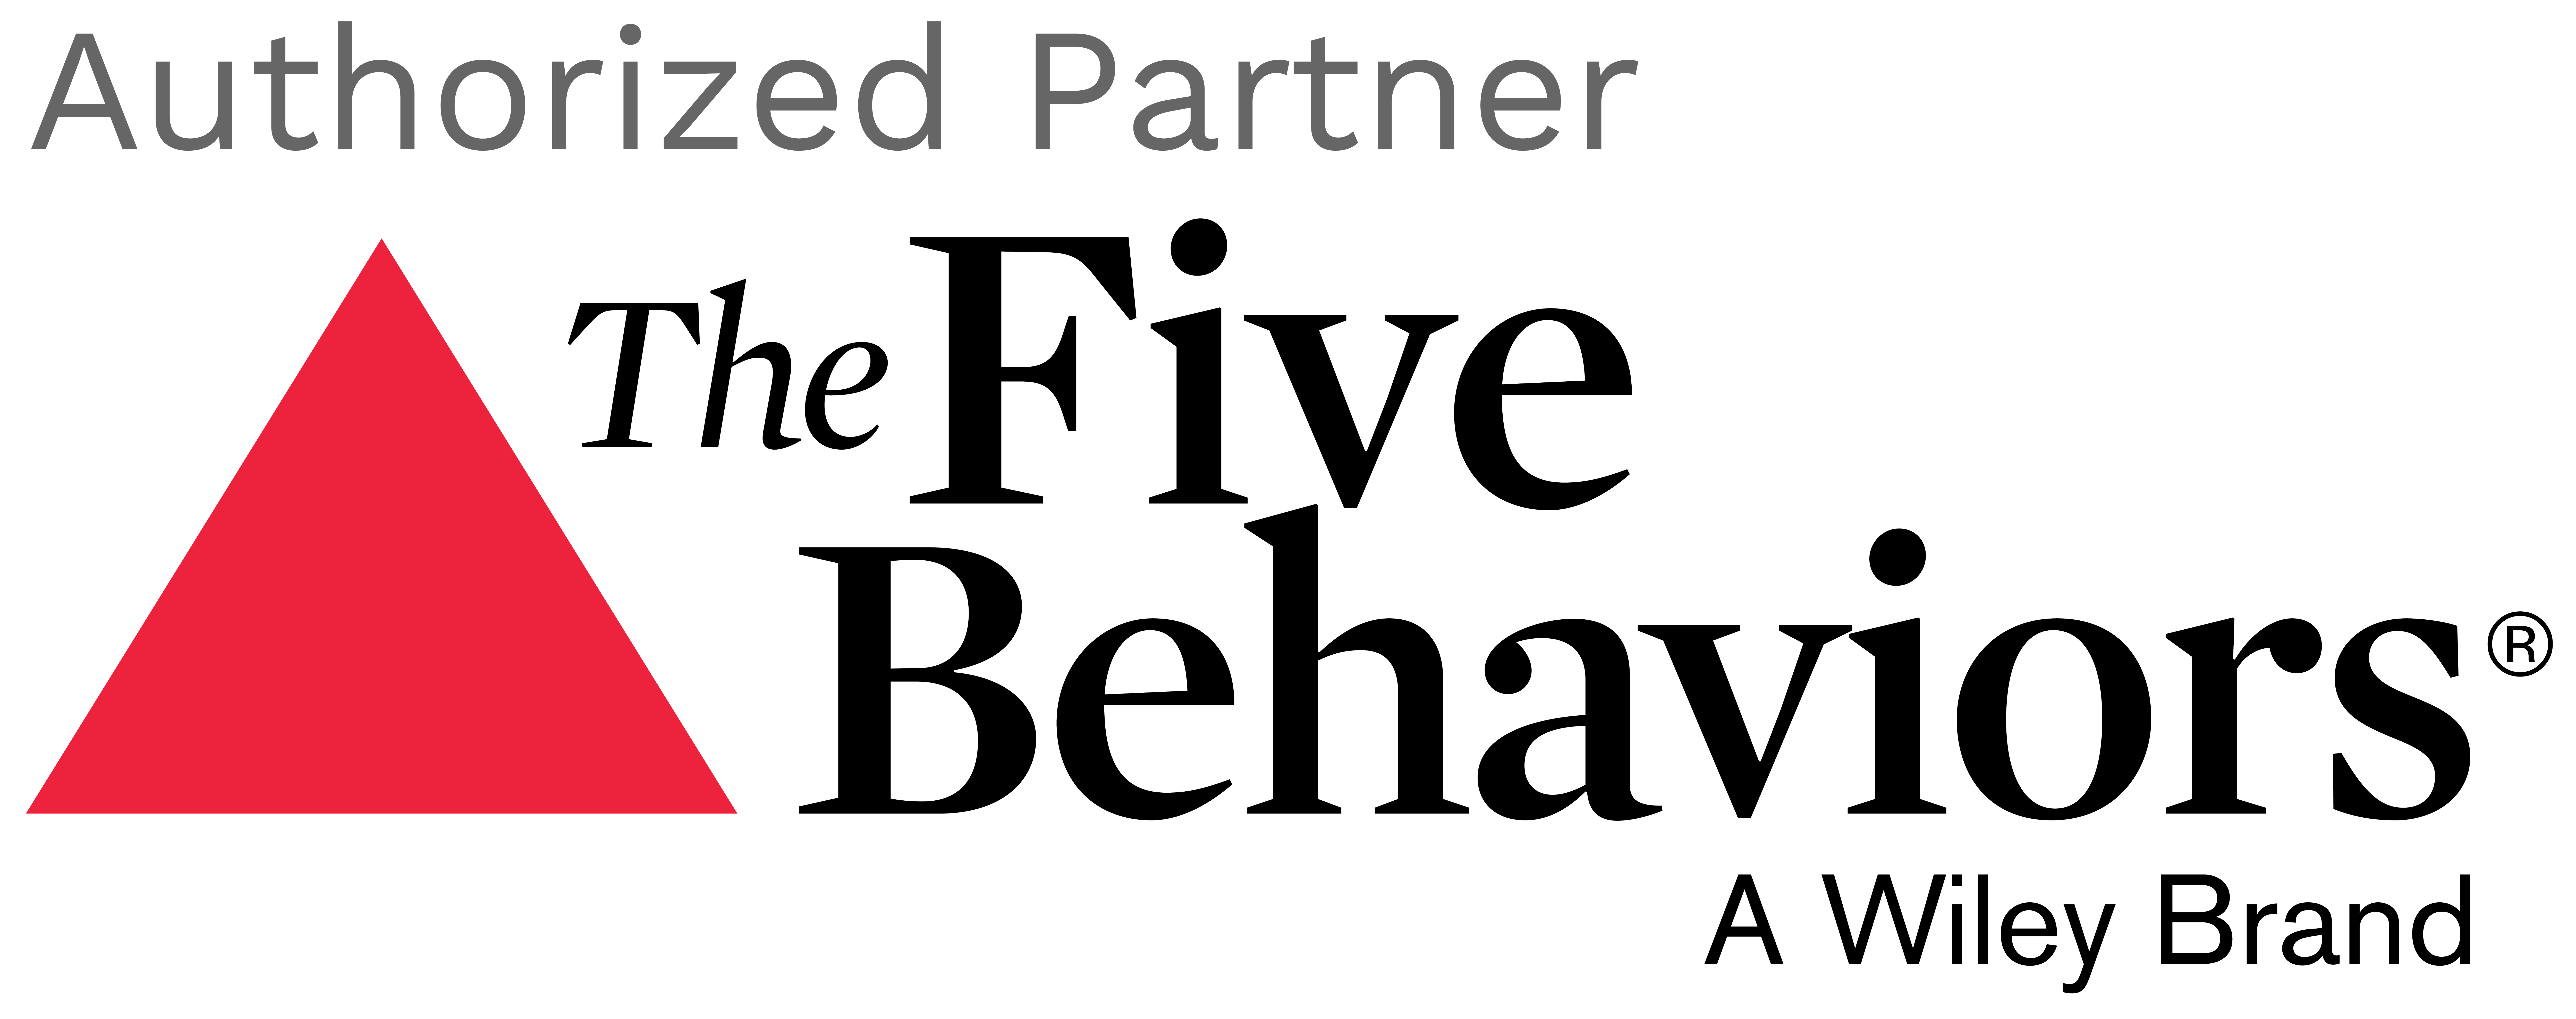 Authorized Partner Five Behaviors